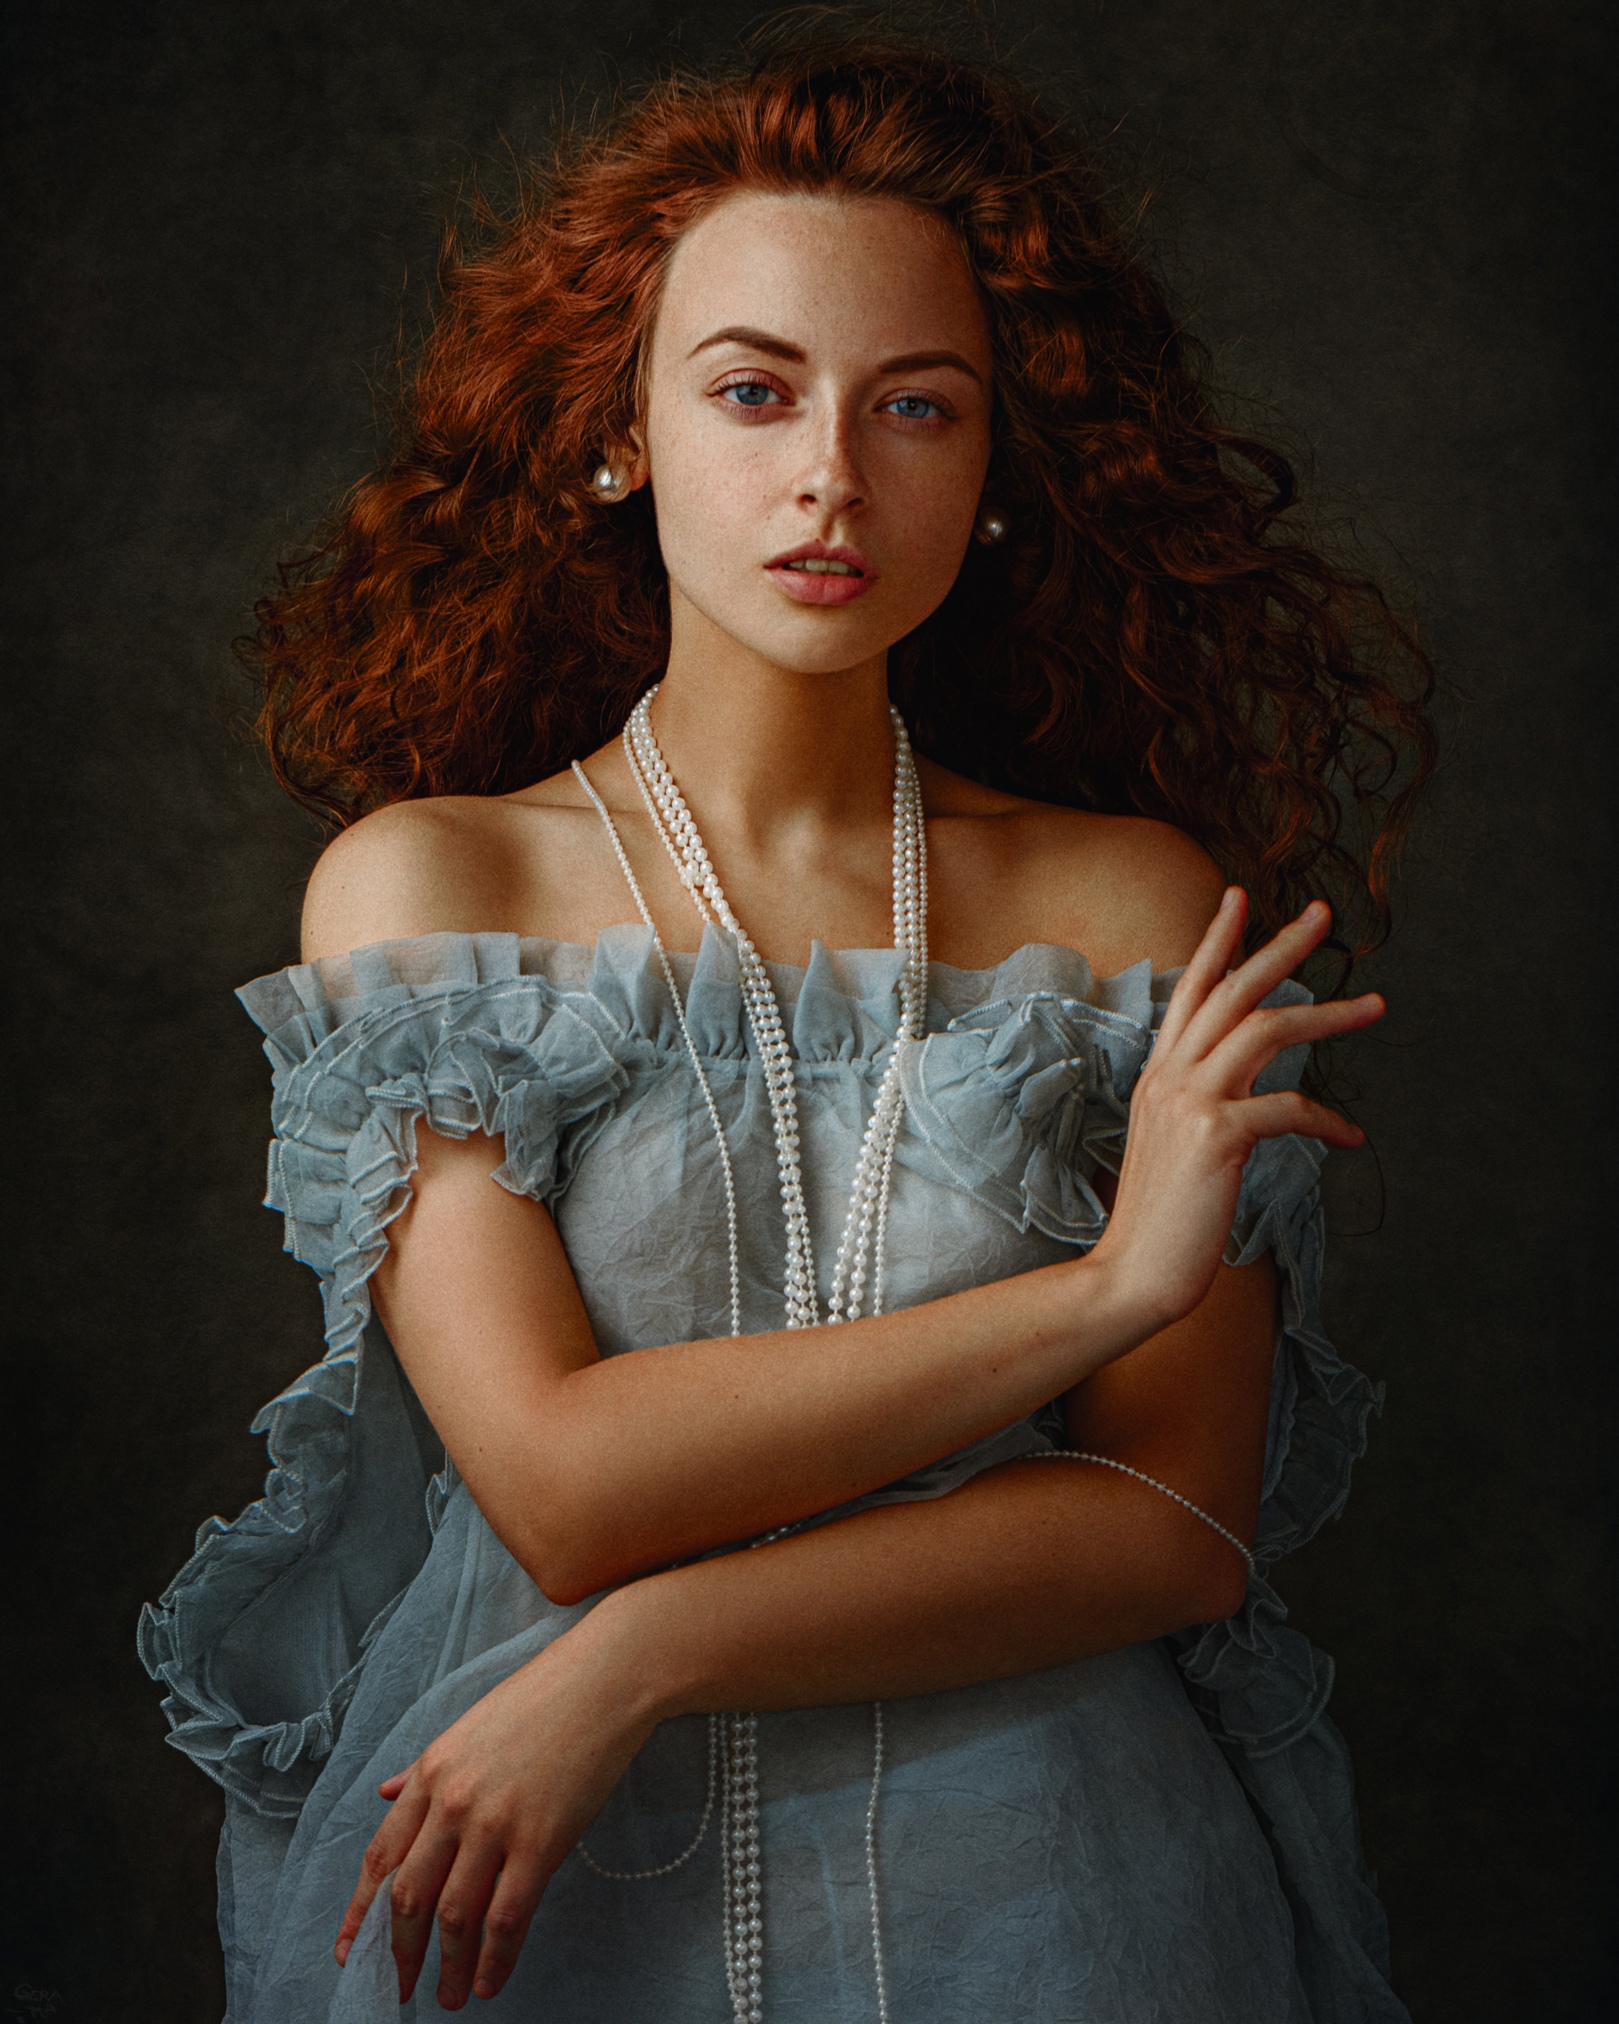 Women Nastya Polukhina Redhead Long Hair Curly Hair Freckles Looking At Viewer Blue Eyes Jewelry Ear 1619x2024